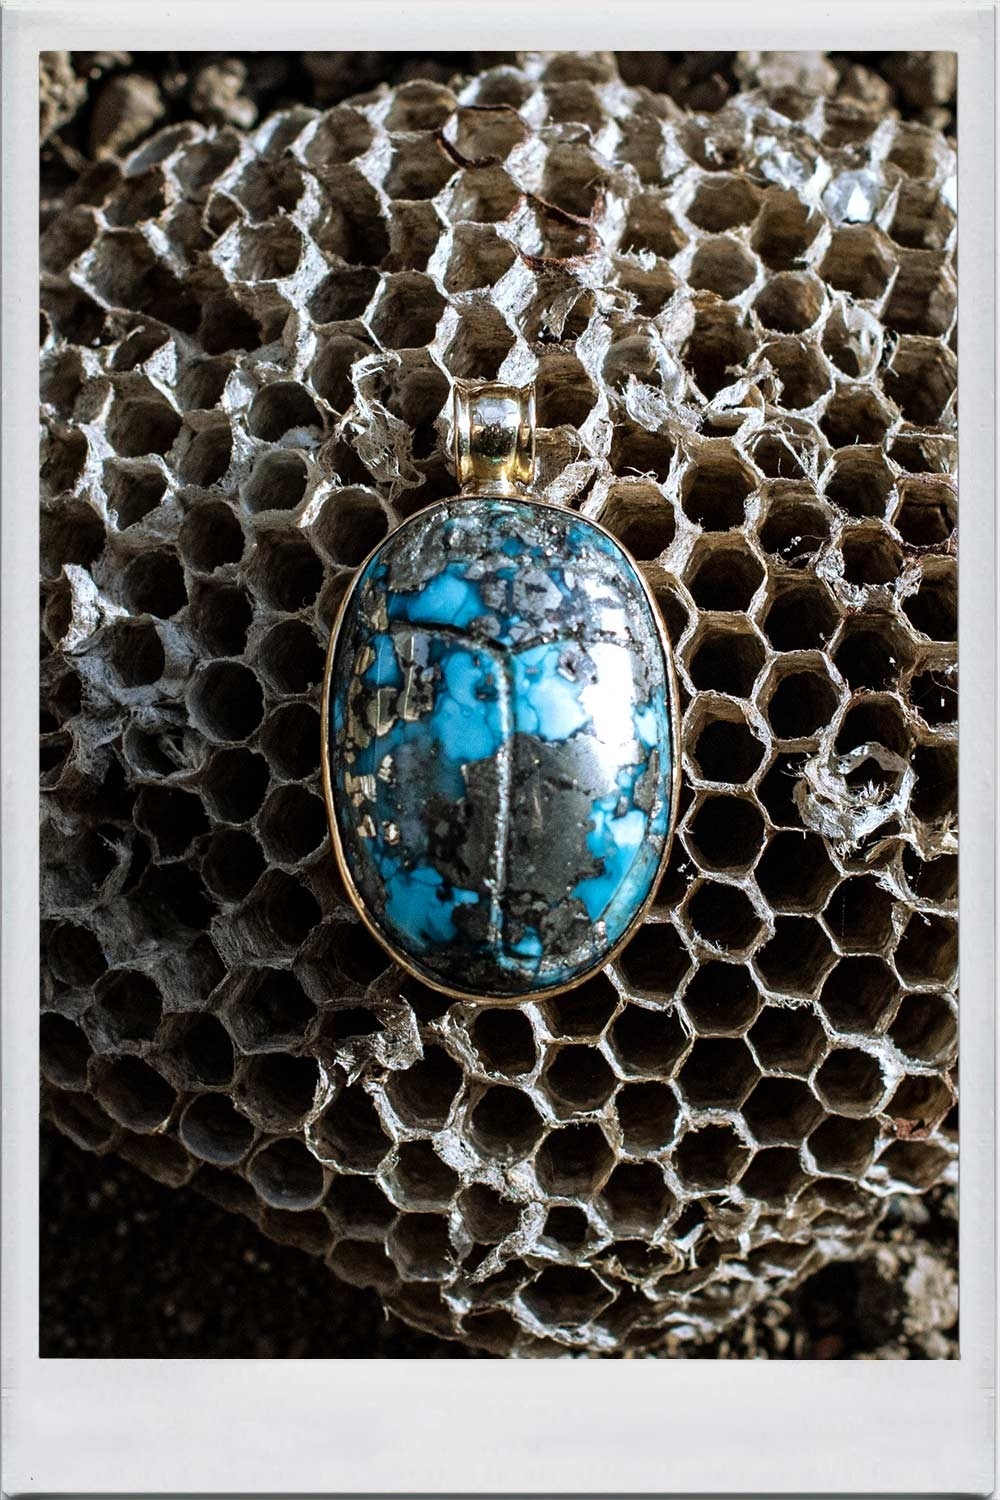 Beetle necklace by Otzar